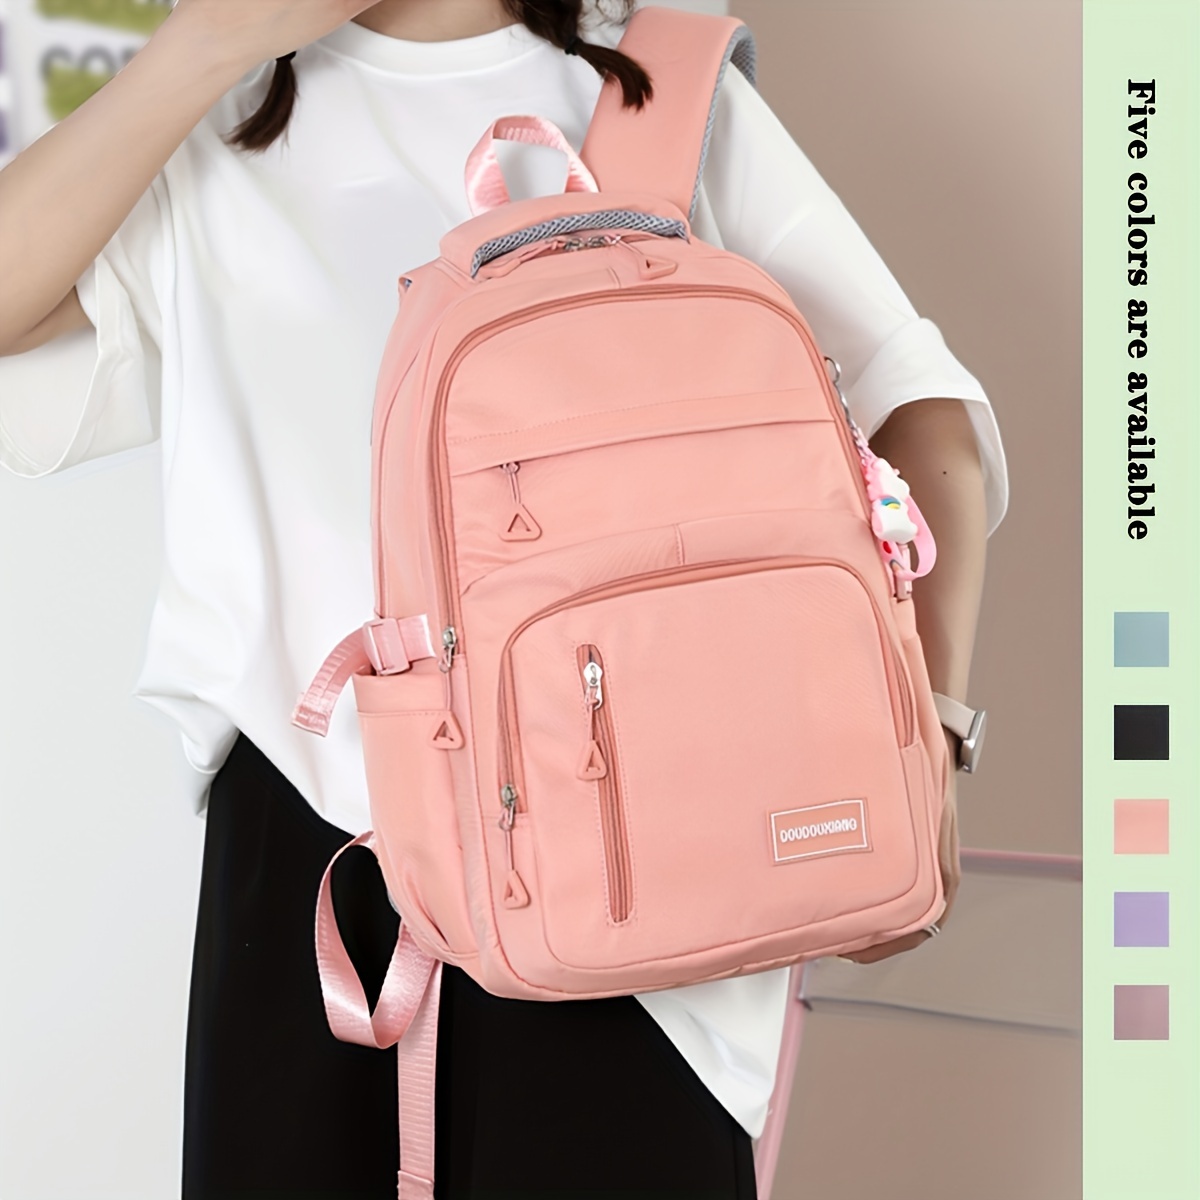 

Fashionable Backpack, Water-resistant, Casual Solid Color, Travel & Business Laptop Bag, Multiple Pockets, Adjustable Straps